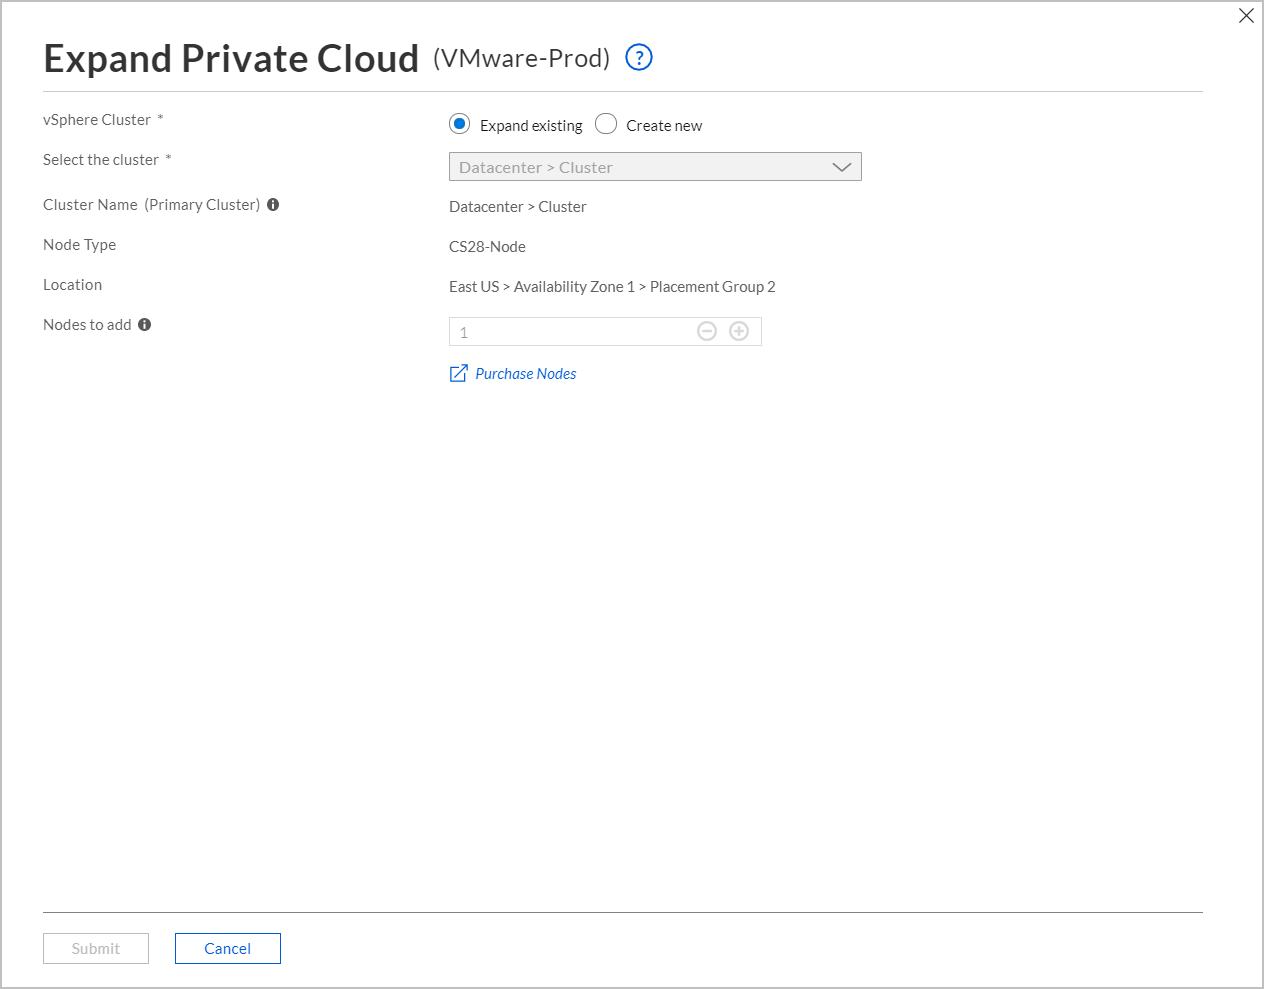 Expand private cloud - add nodes